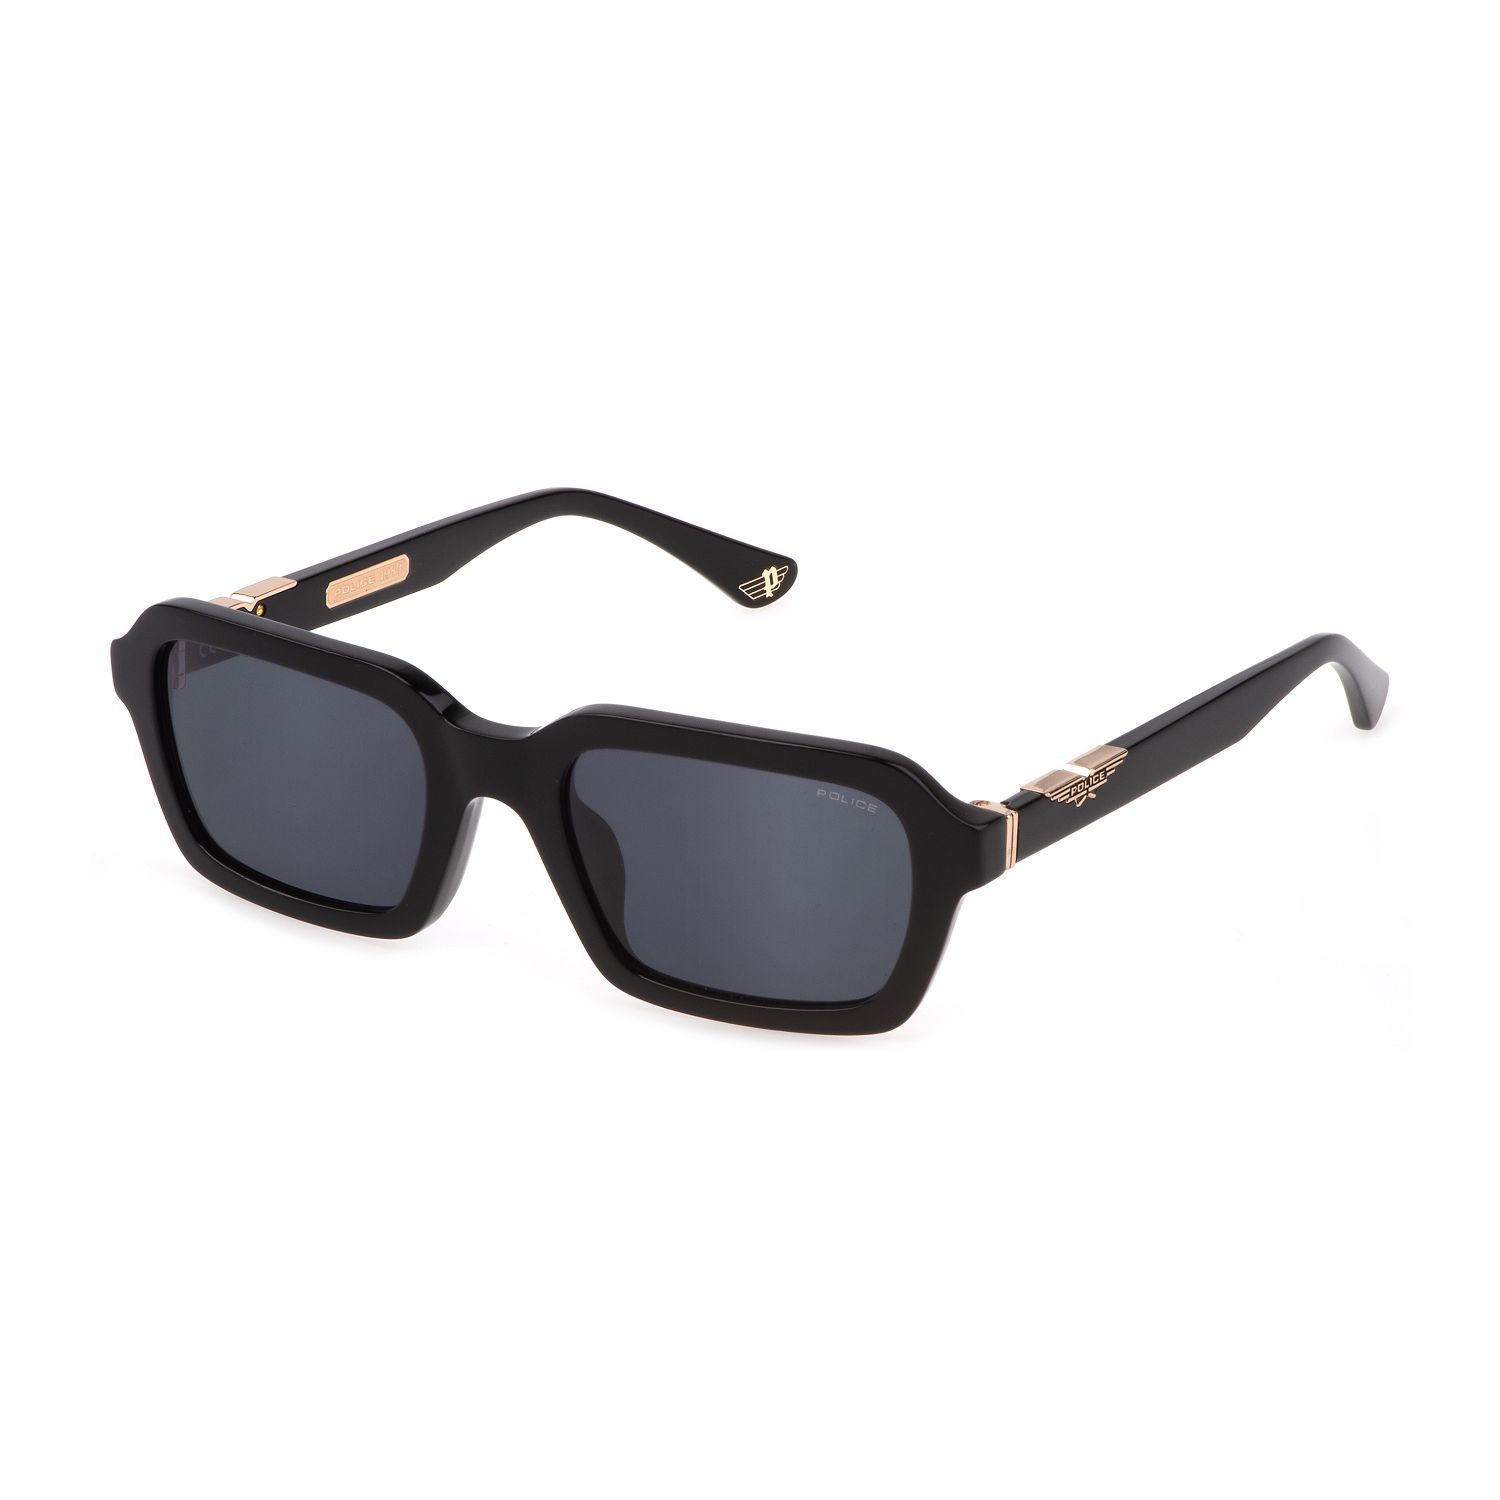 SPLL14M Rectangle Sunglasses 700 - size 53